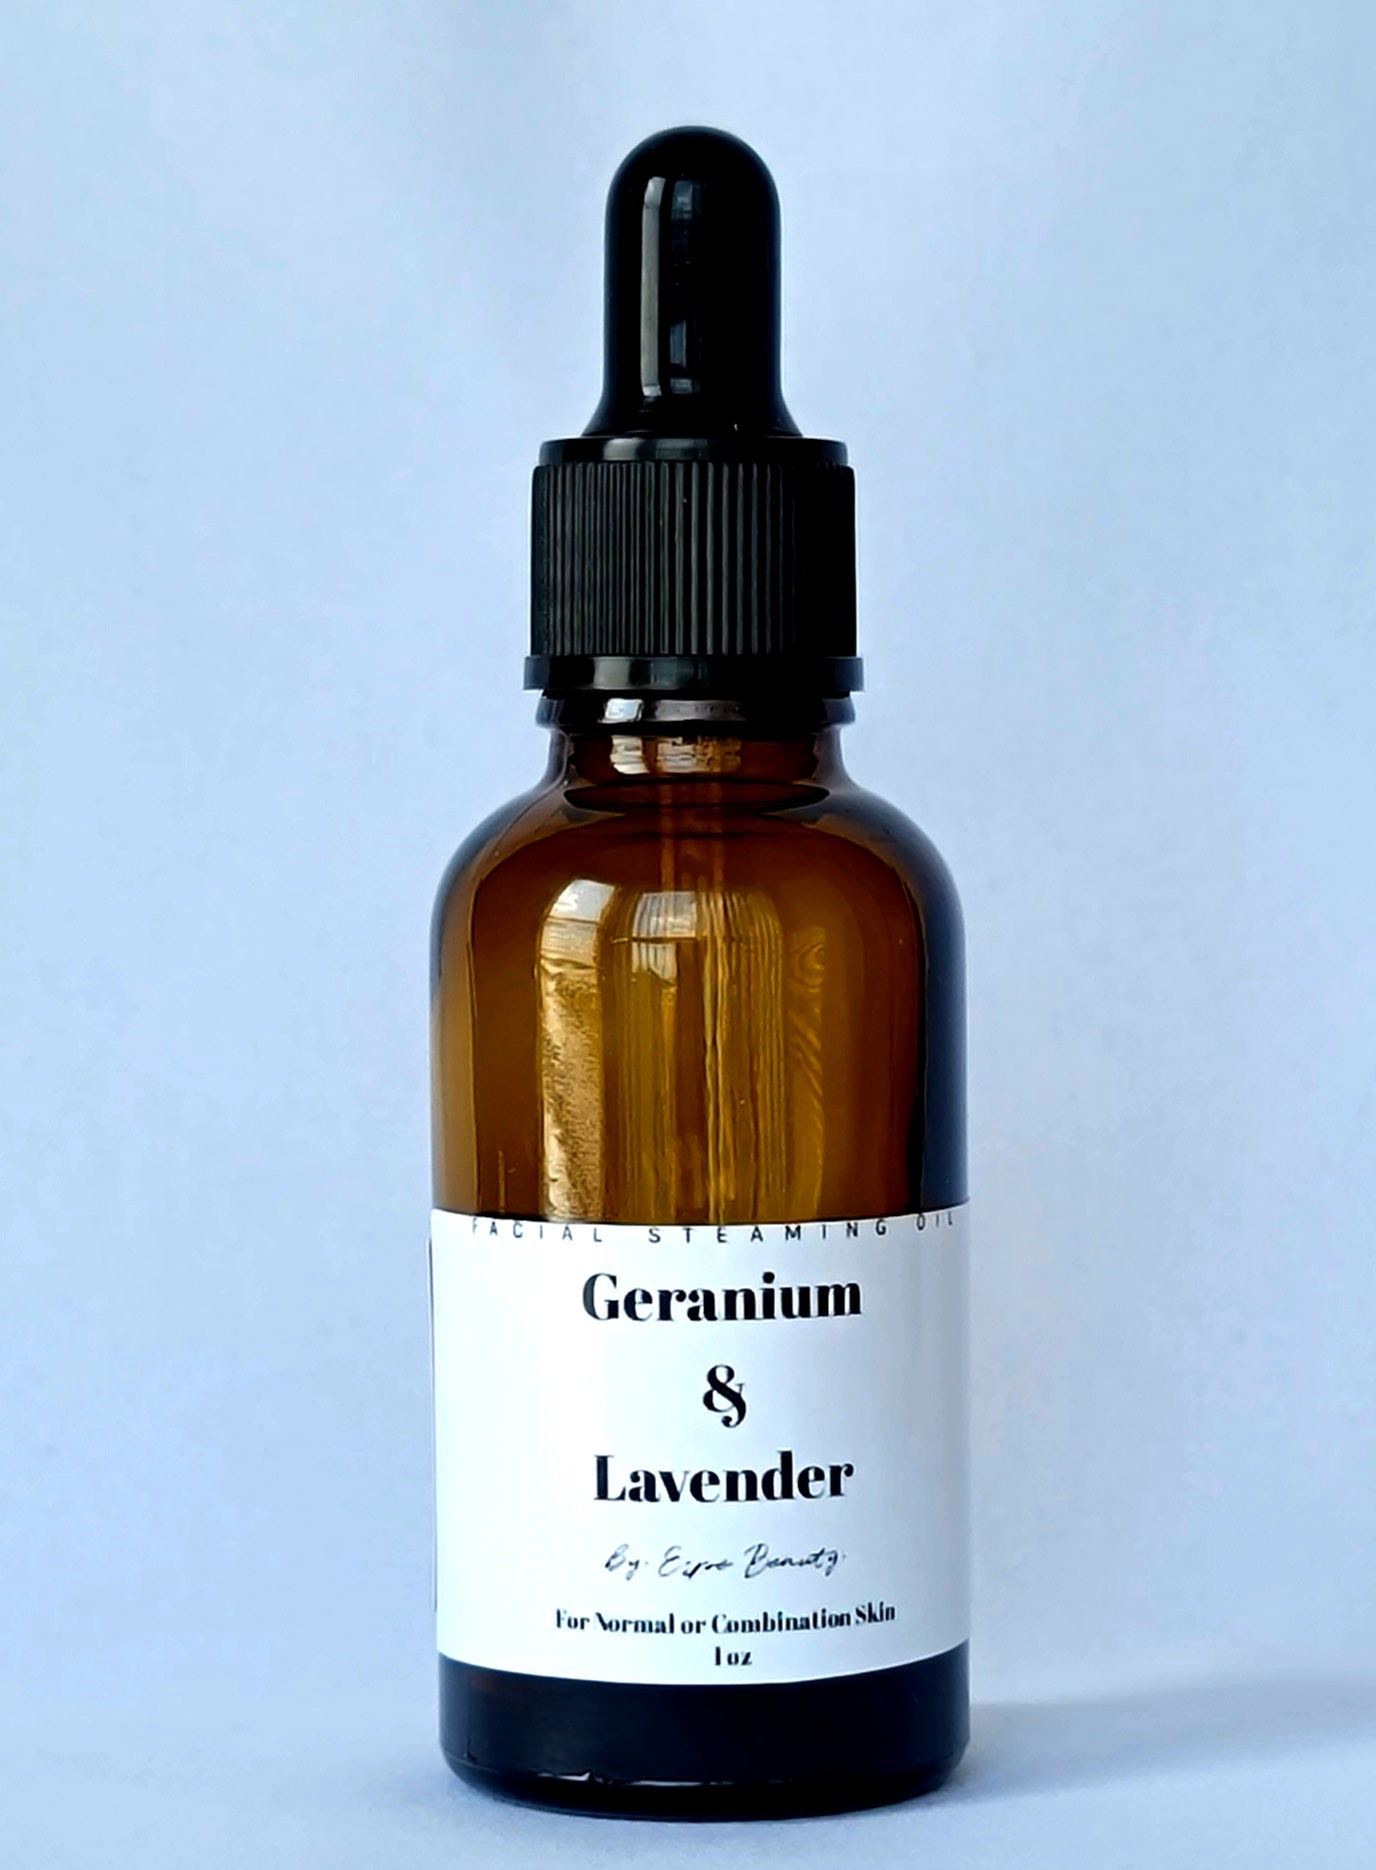 Geranium and Lavender Facial Steaming Oil